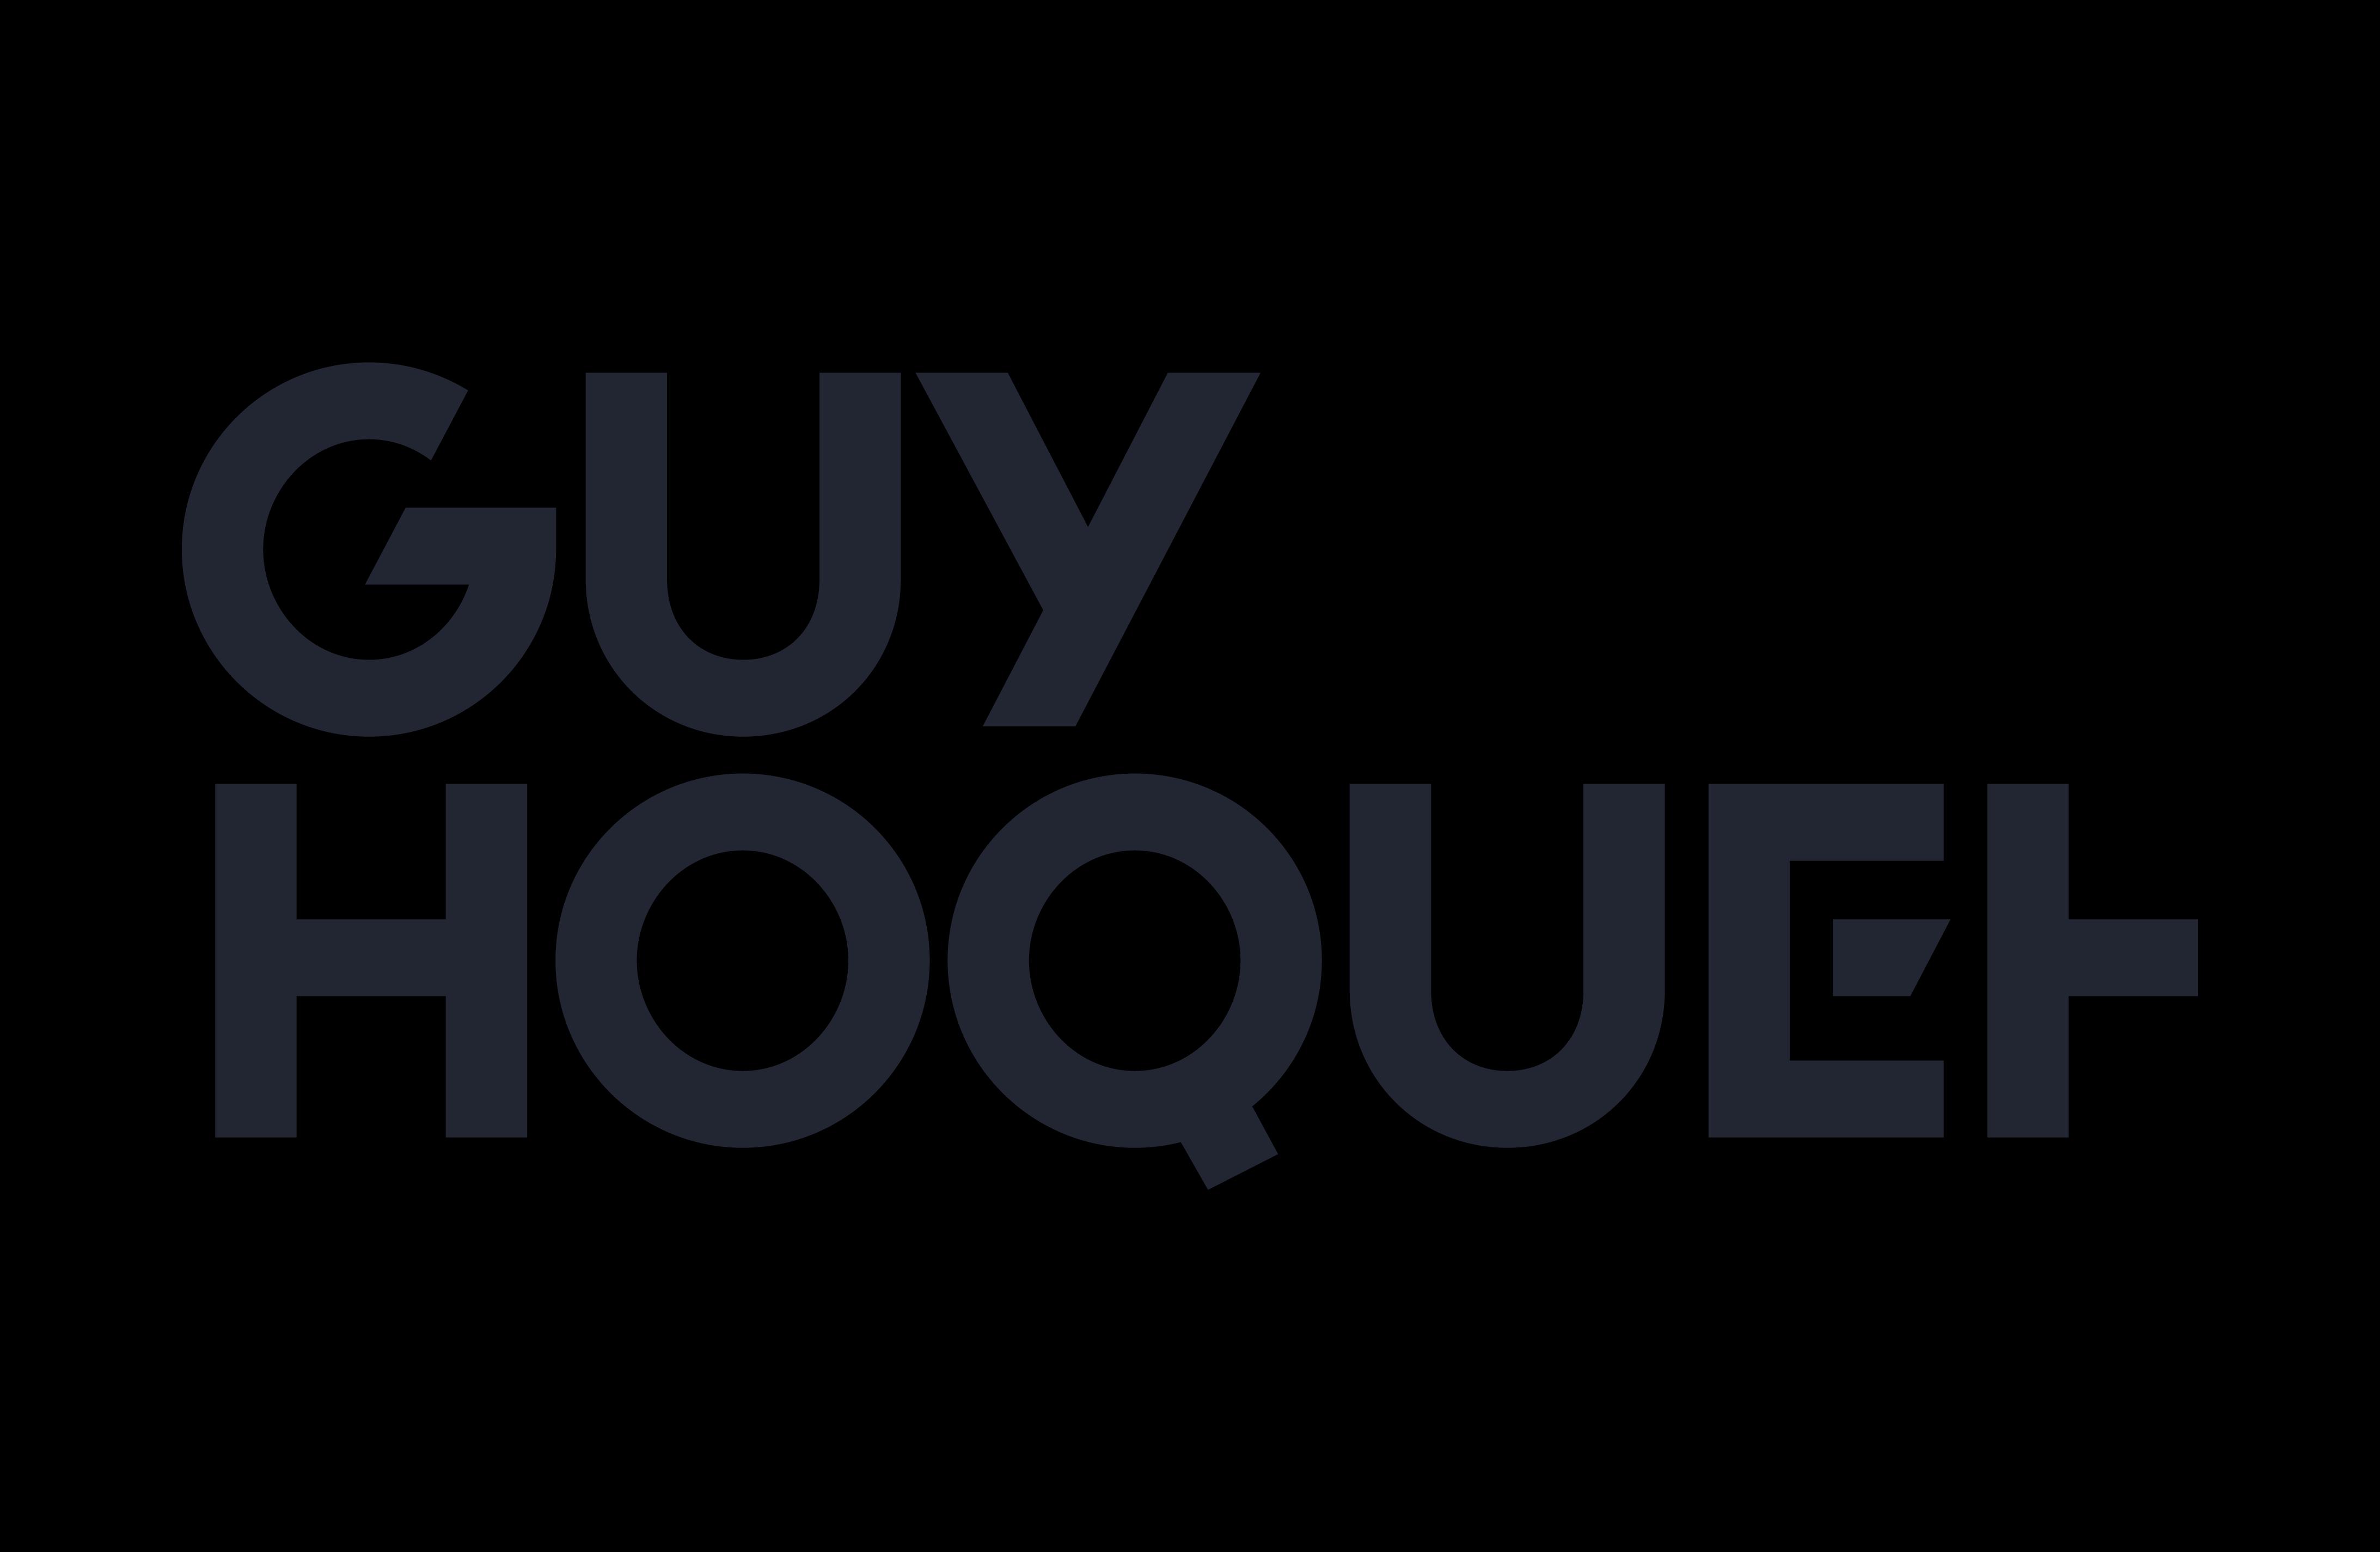 Guy Hoquet Carqueiranne